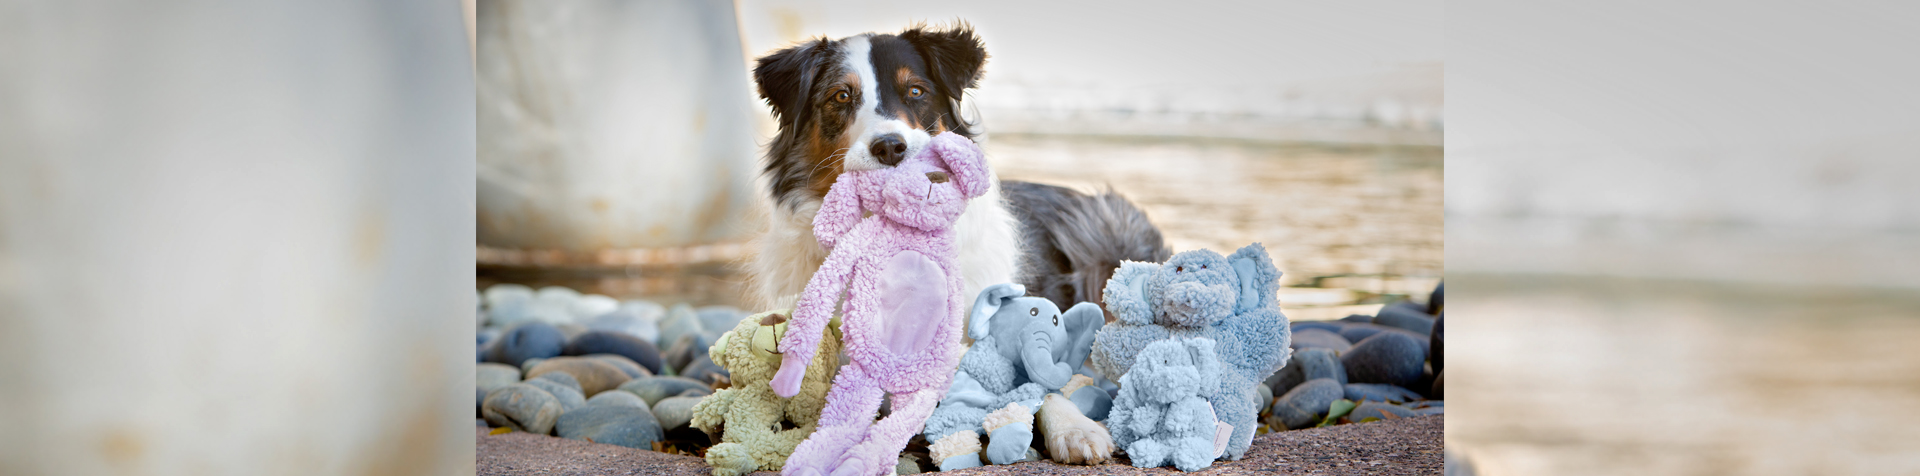 Multipet Aromadog Calming Bear Shaped Fleece Plush Assorted Dog Toy,  X-Small